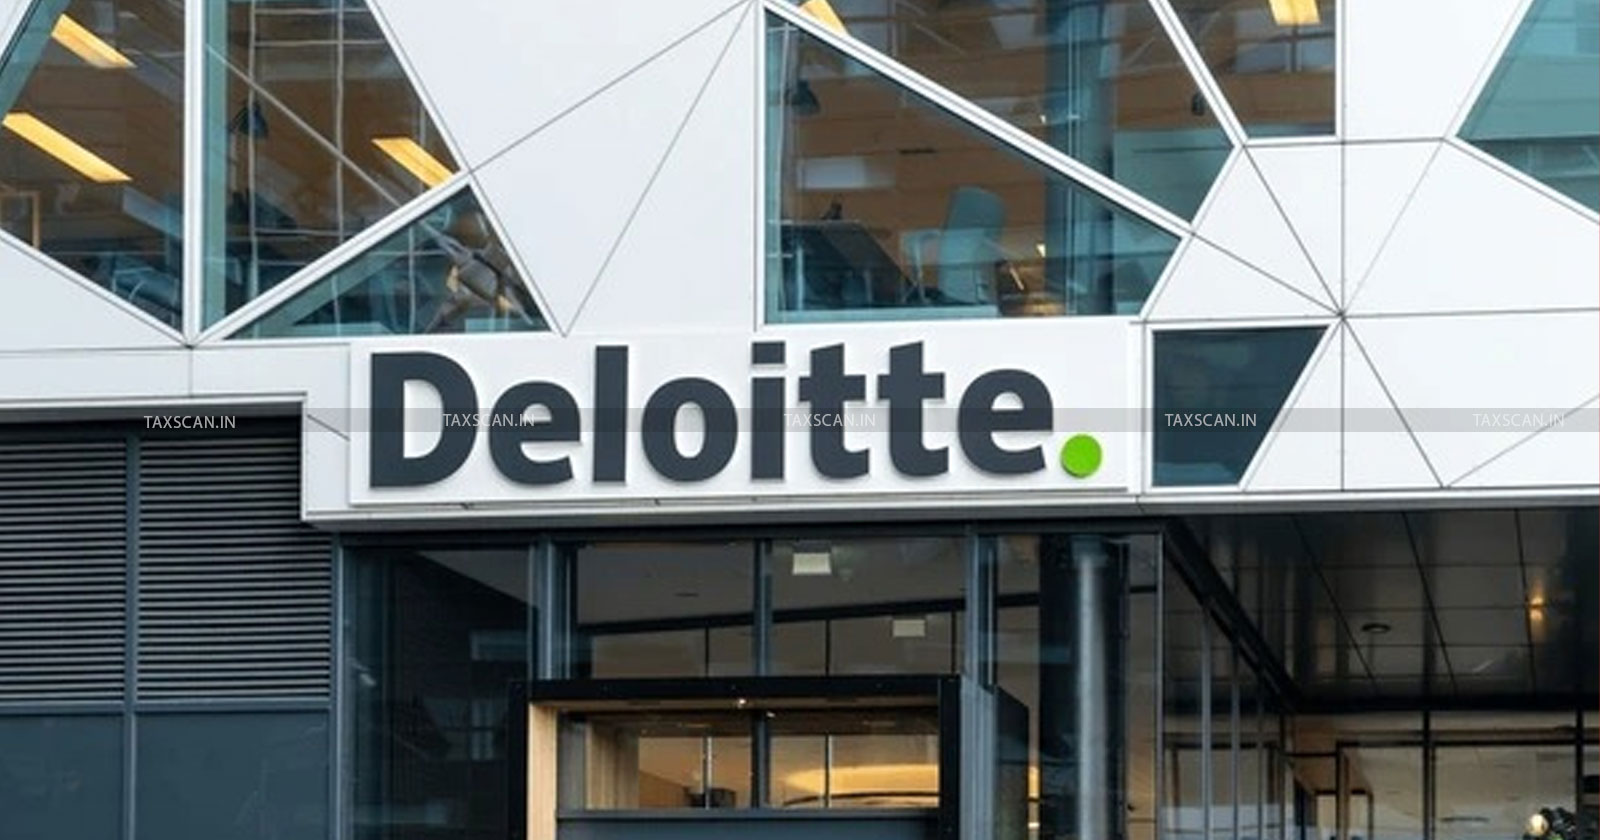 MBA Vacancy in Deloitte - CA Vacancy in Deloitte - CA Hiring in Deloitte - CA opportunities in Deloitte - taxscan